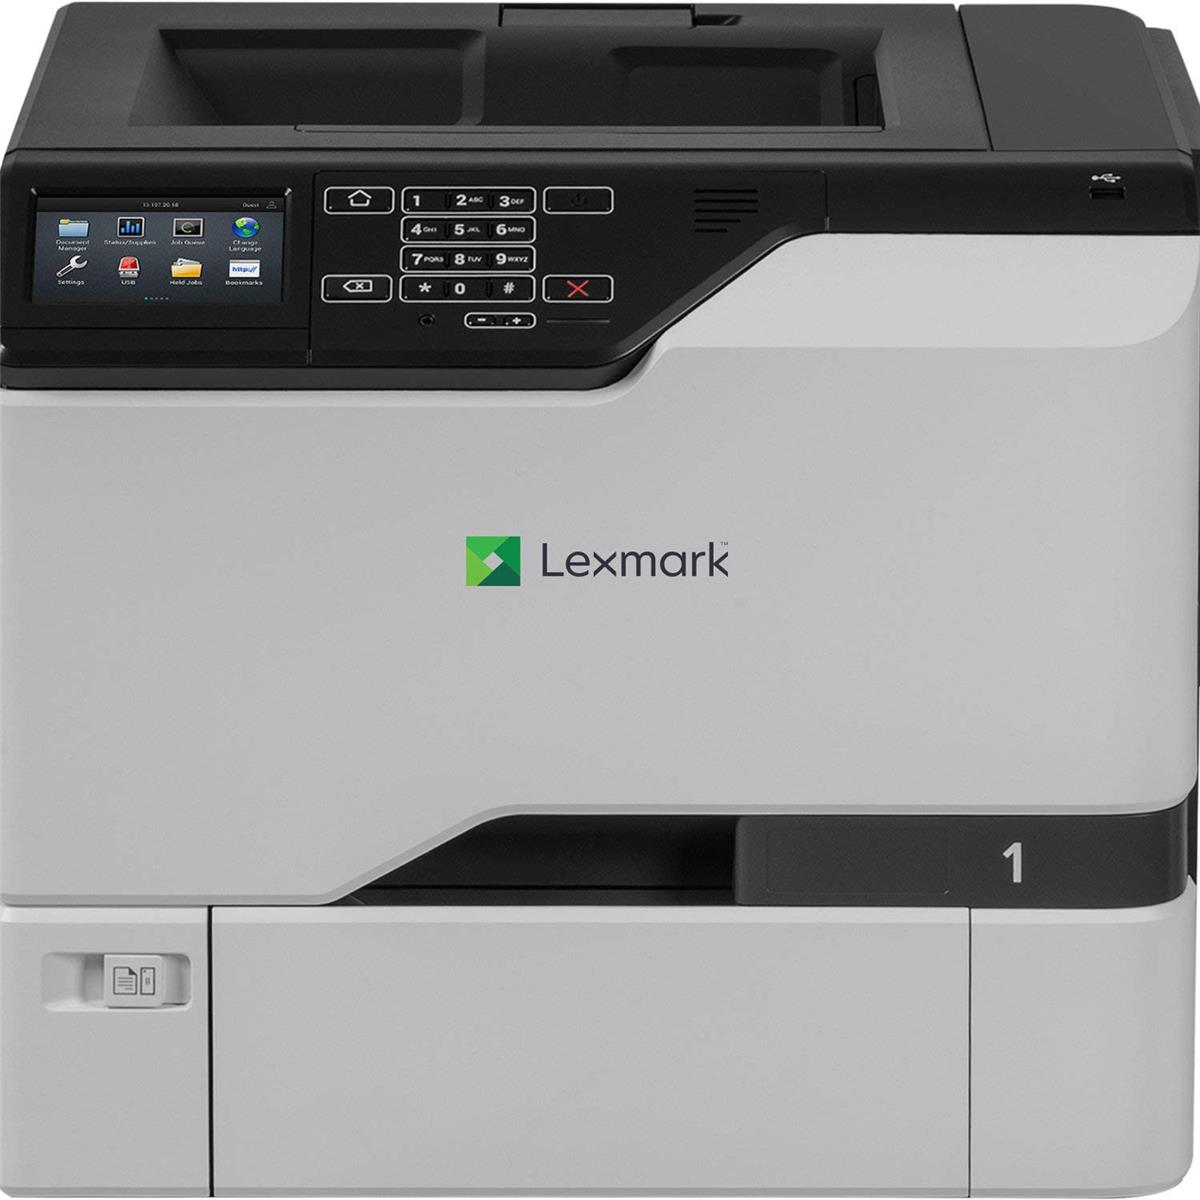 Image of Lexmark CS725de Color Laser Printer